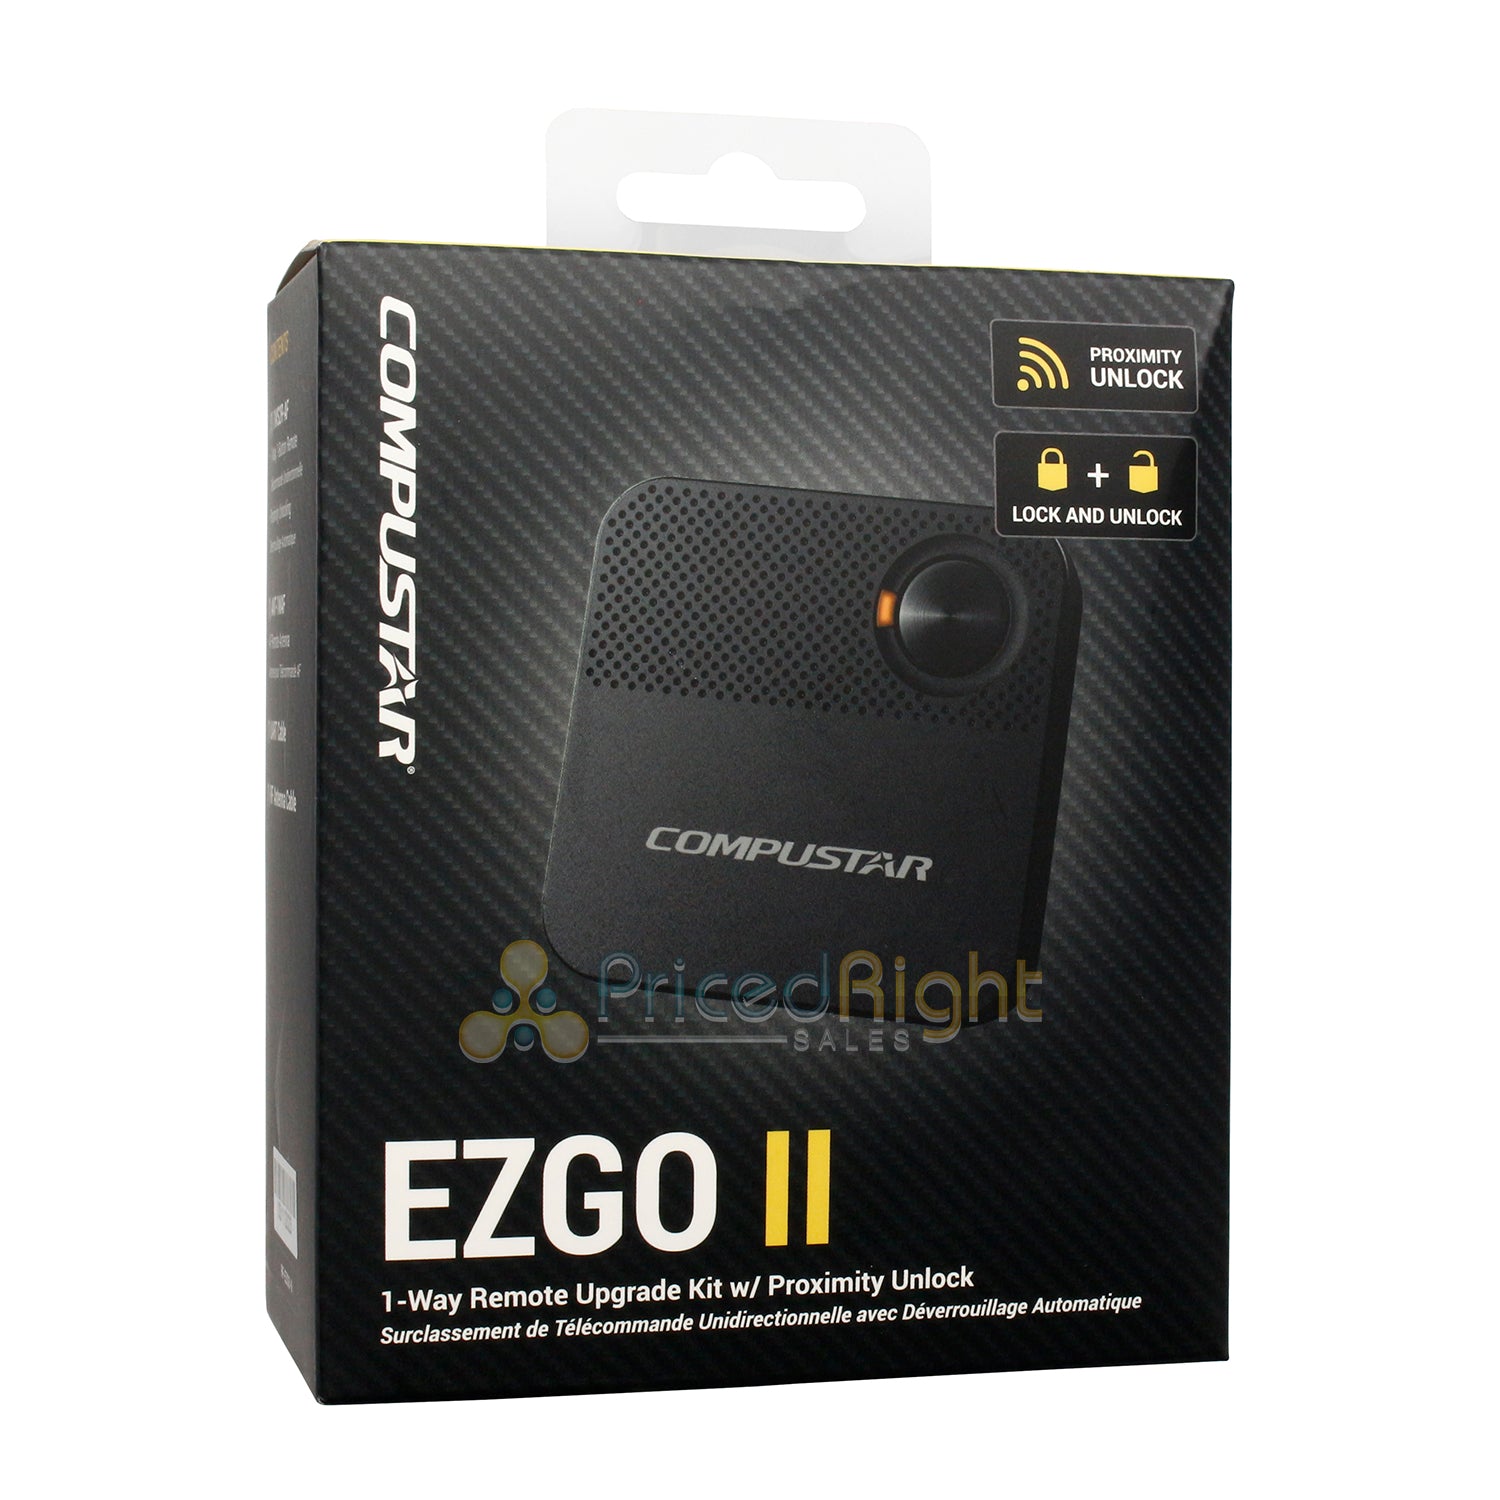 Compustar EZGO II 1-Way Remote Upgrade Kit with Proximity Unlock 100ft Range